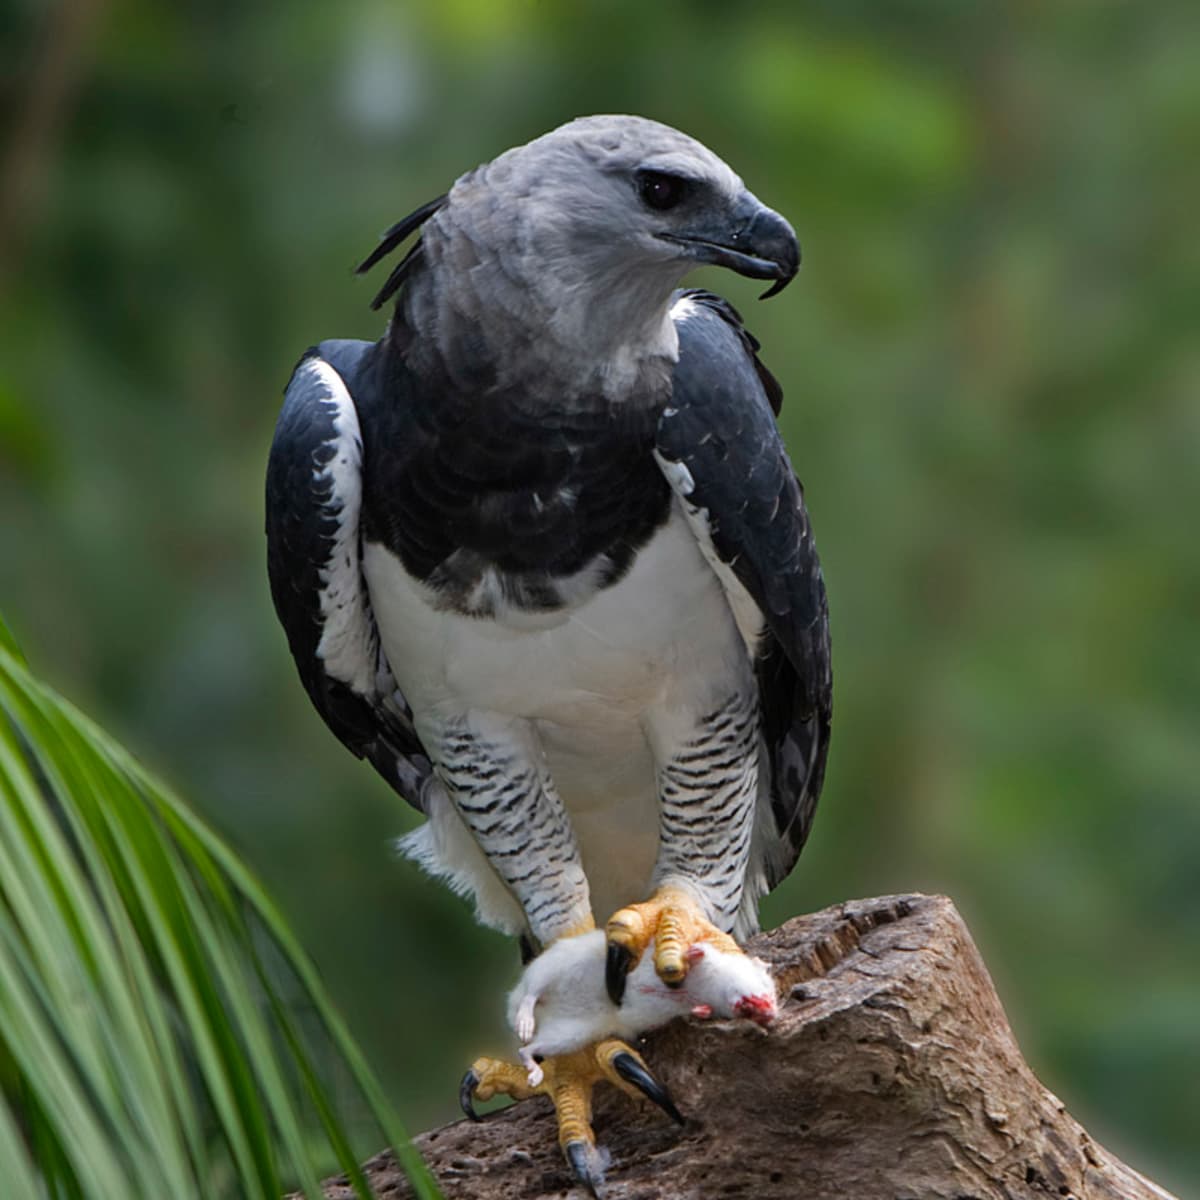 Harpy eagle – The Dallas World Aquarium